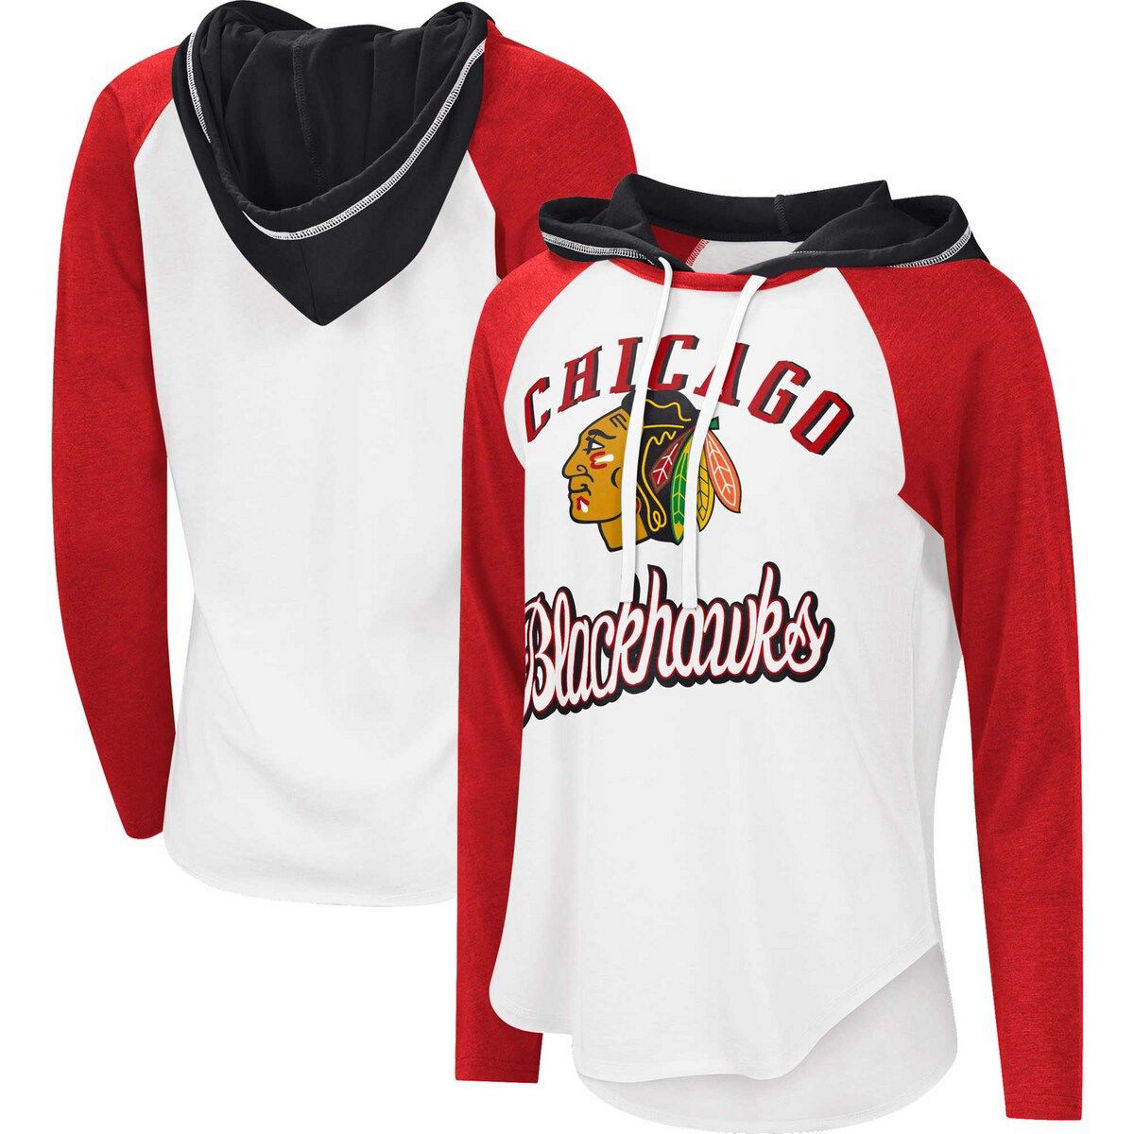 G-III Sports by Carl Banks Women's White/Heather Red Chicago Blackhawks MVP Raglan Lightweight Hooded T-Shirt - Image 2 of 4